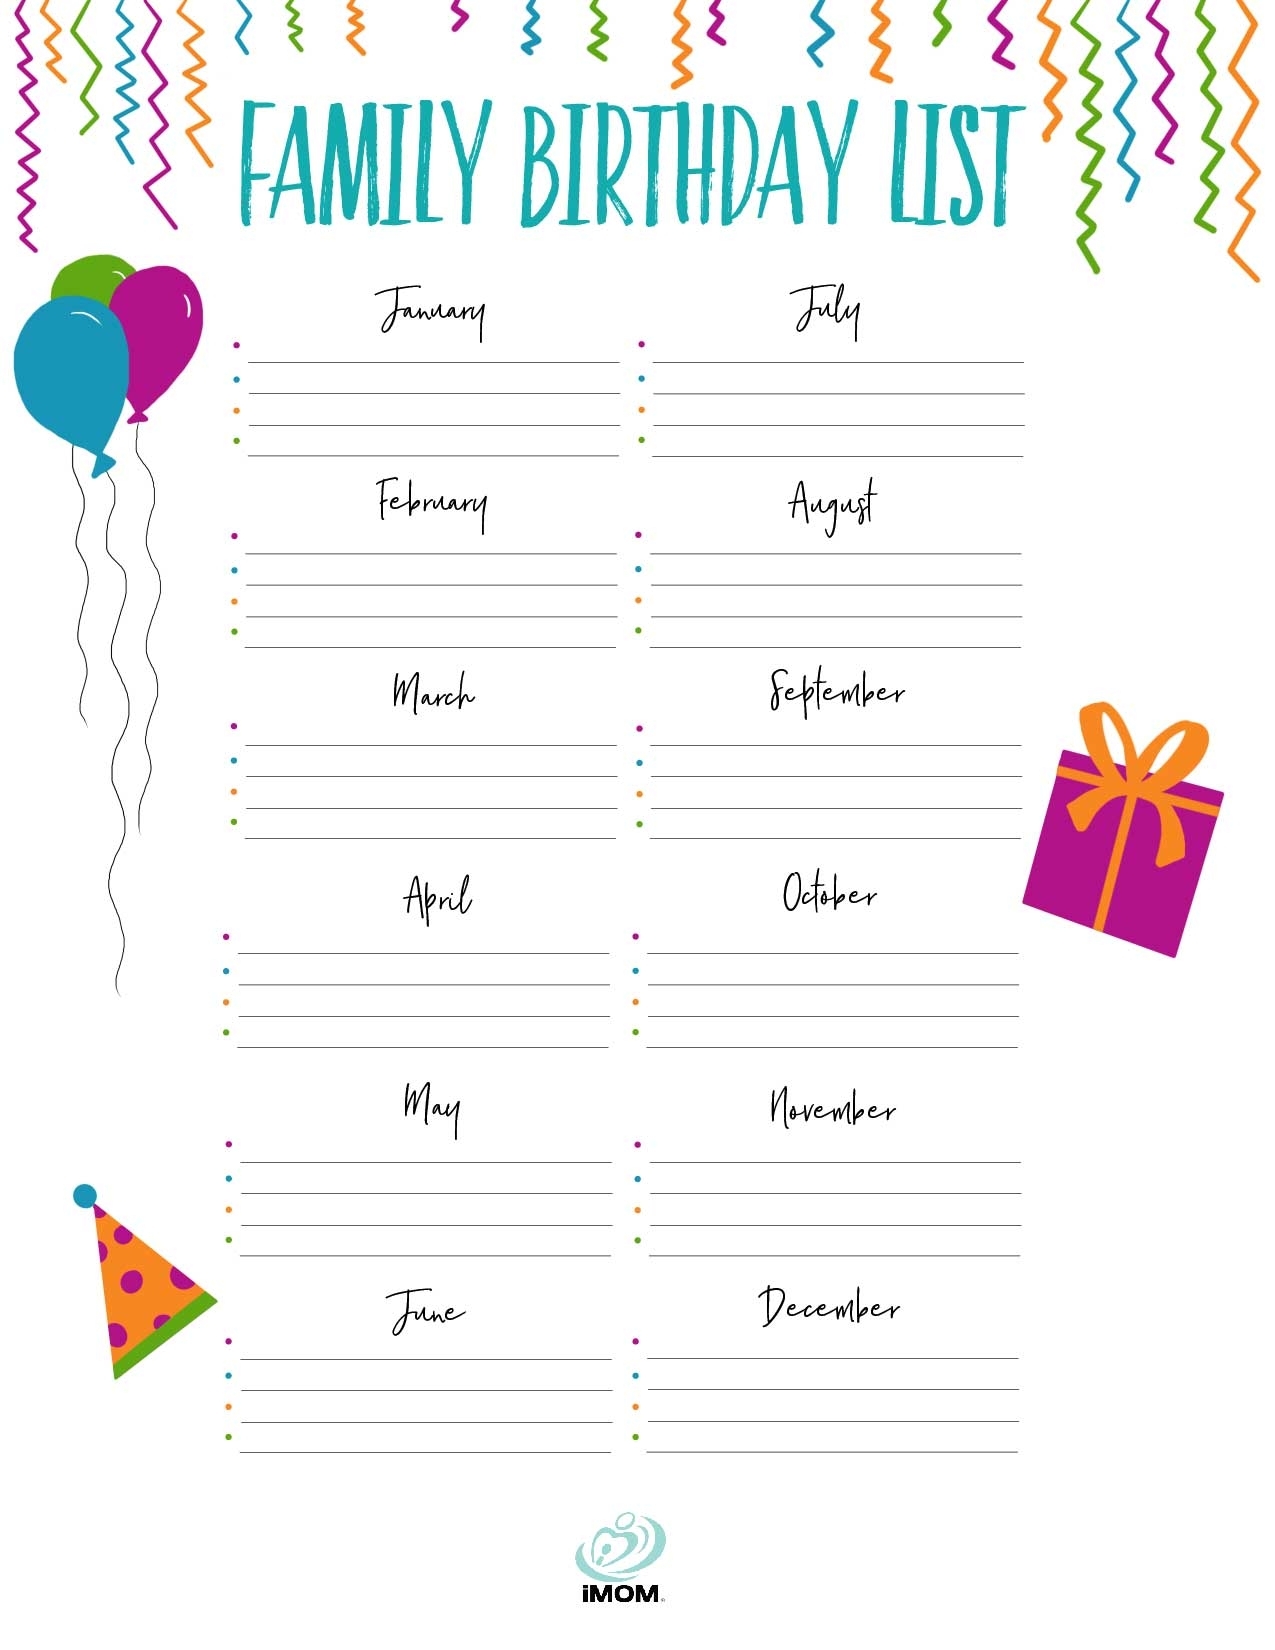 Family Birthday List - Imom